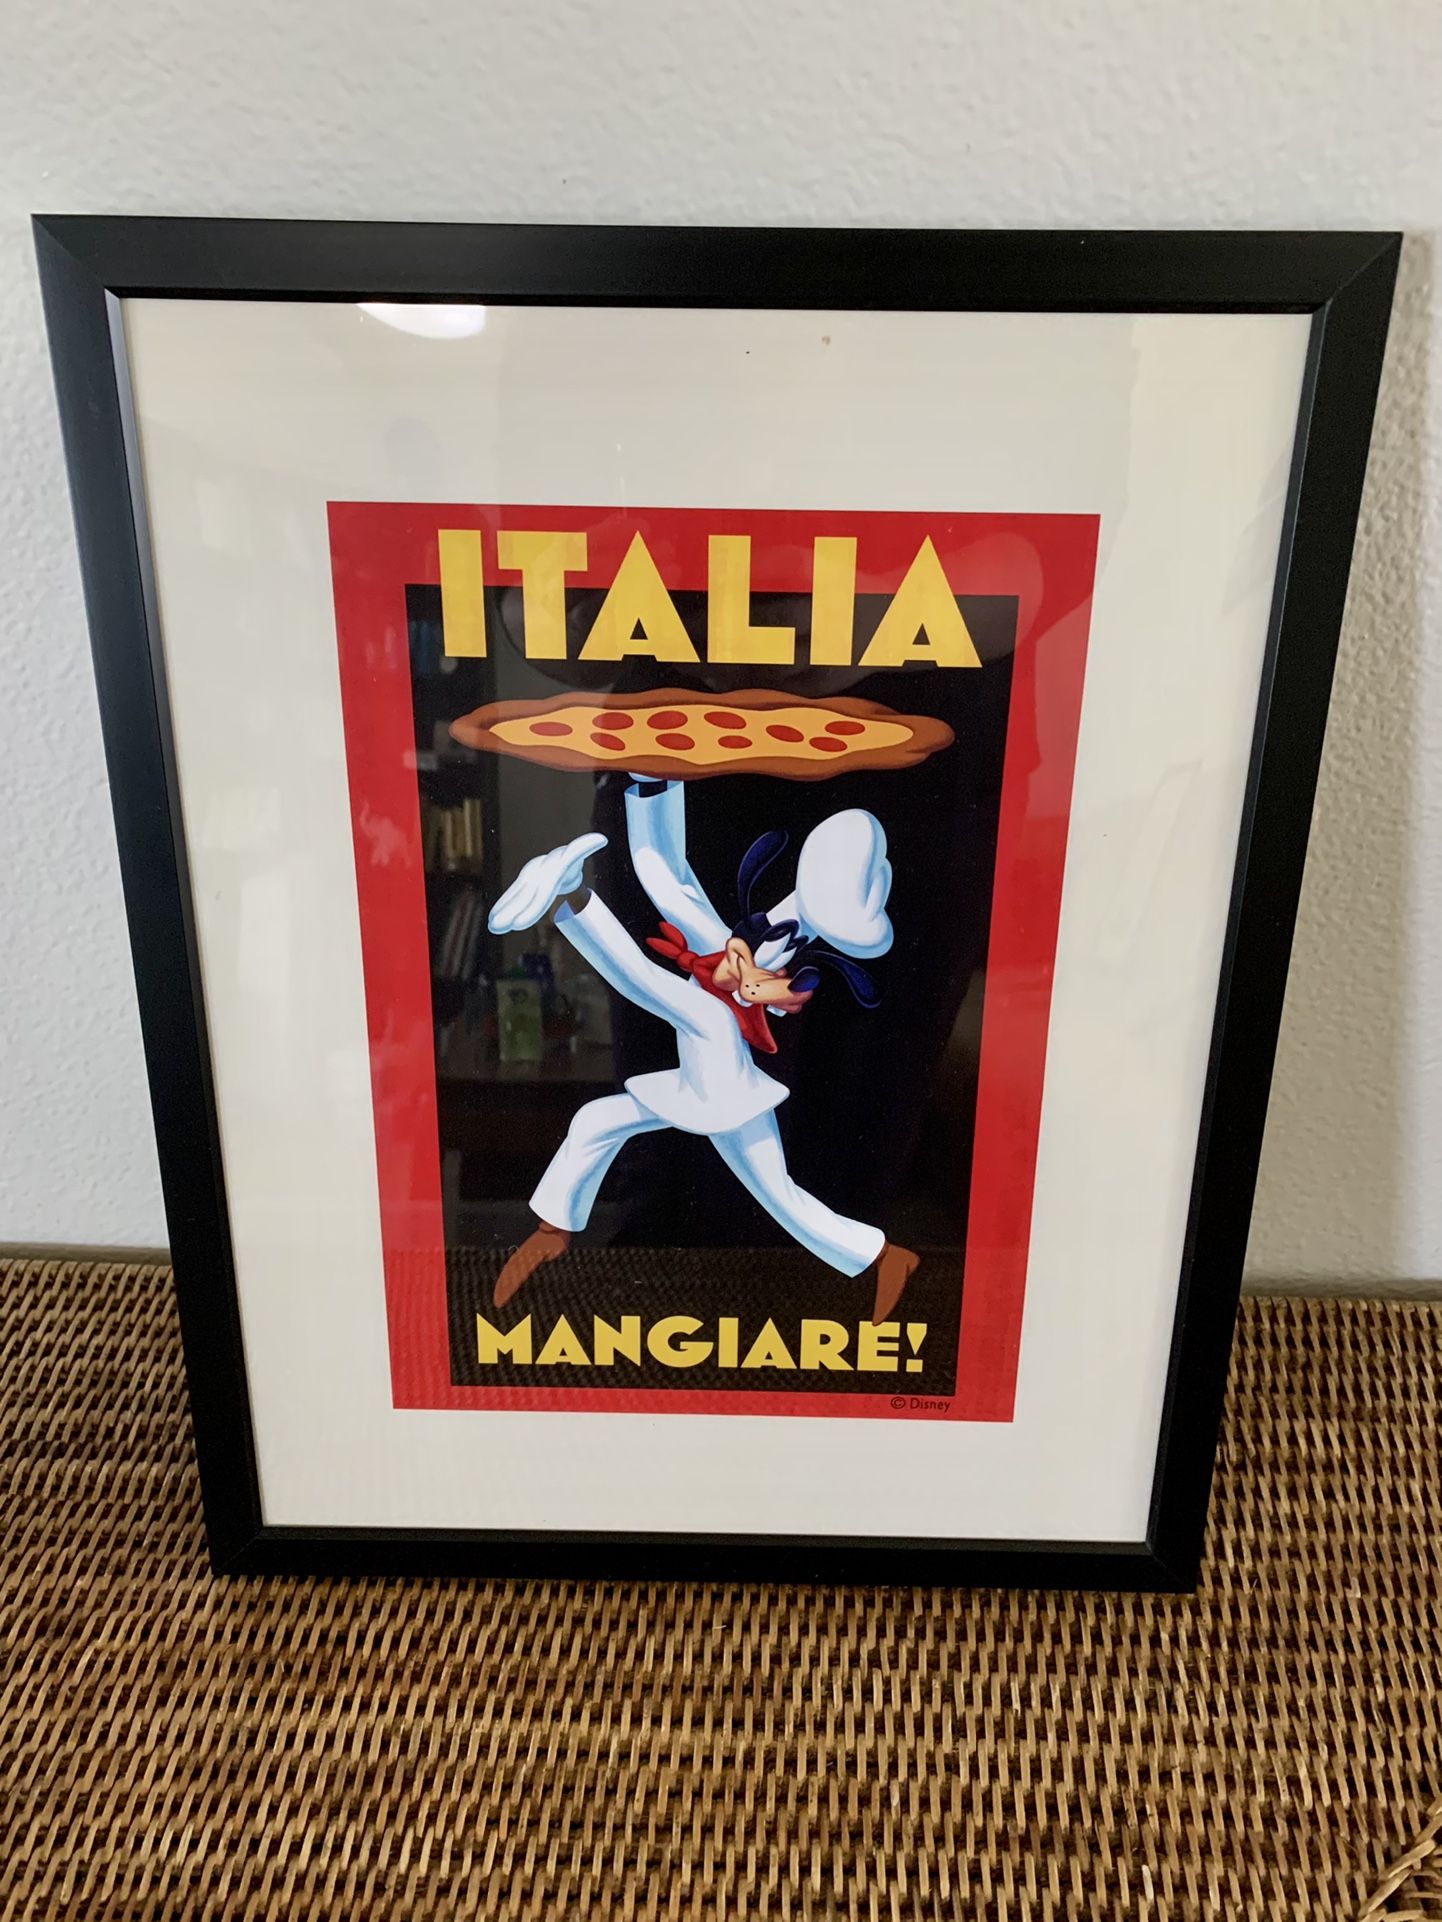 Framed Disney’s Goofy Italia Mangiare Print 11x14”